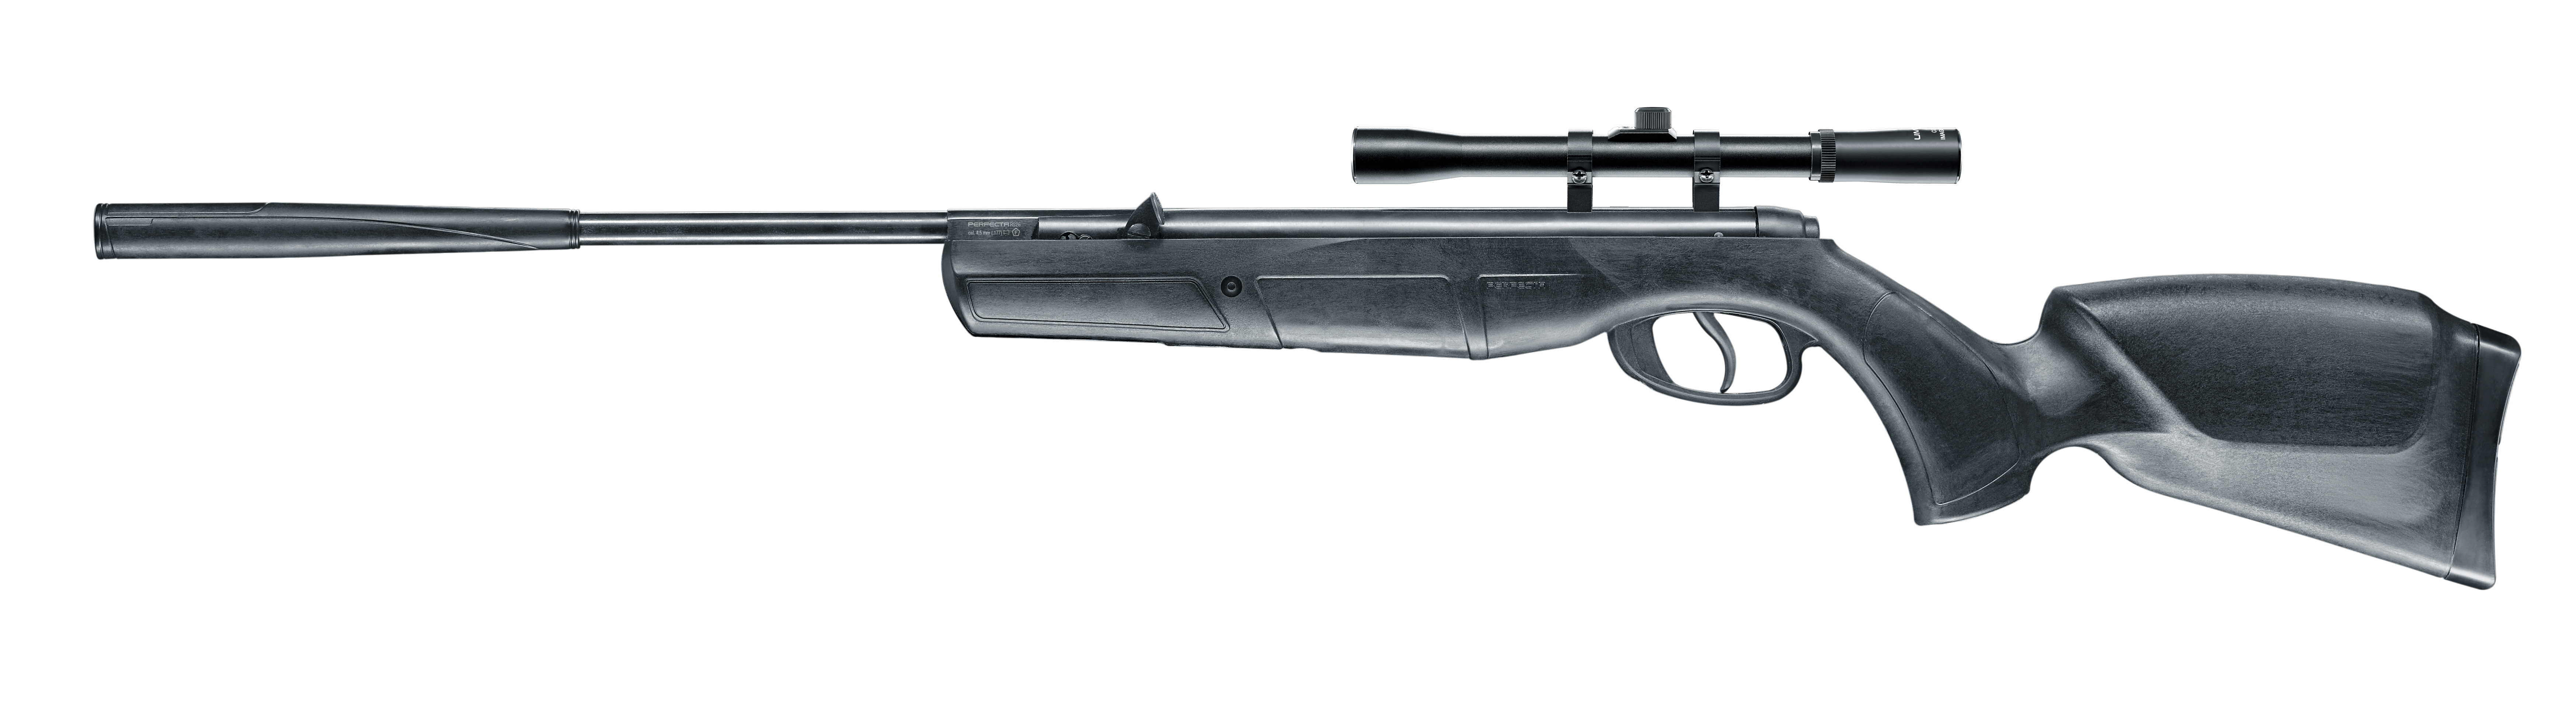 PERFECTA (Umarex) Spring Operated Airgun RS26